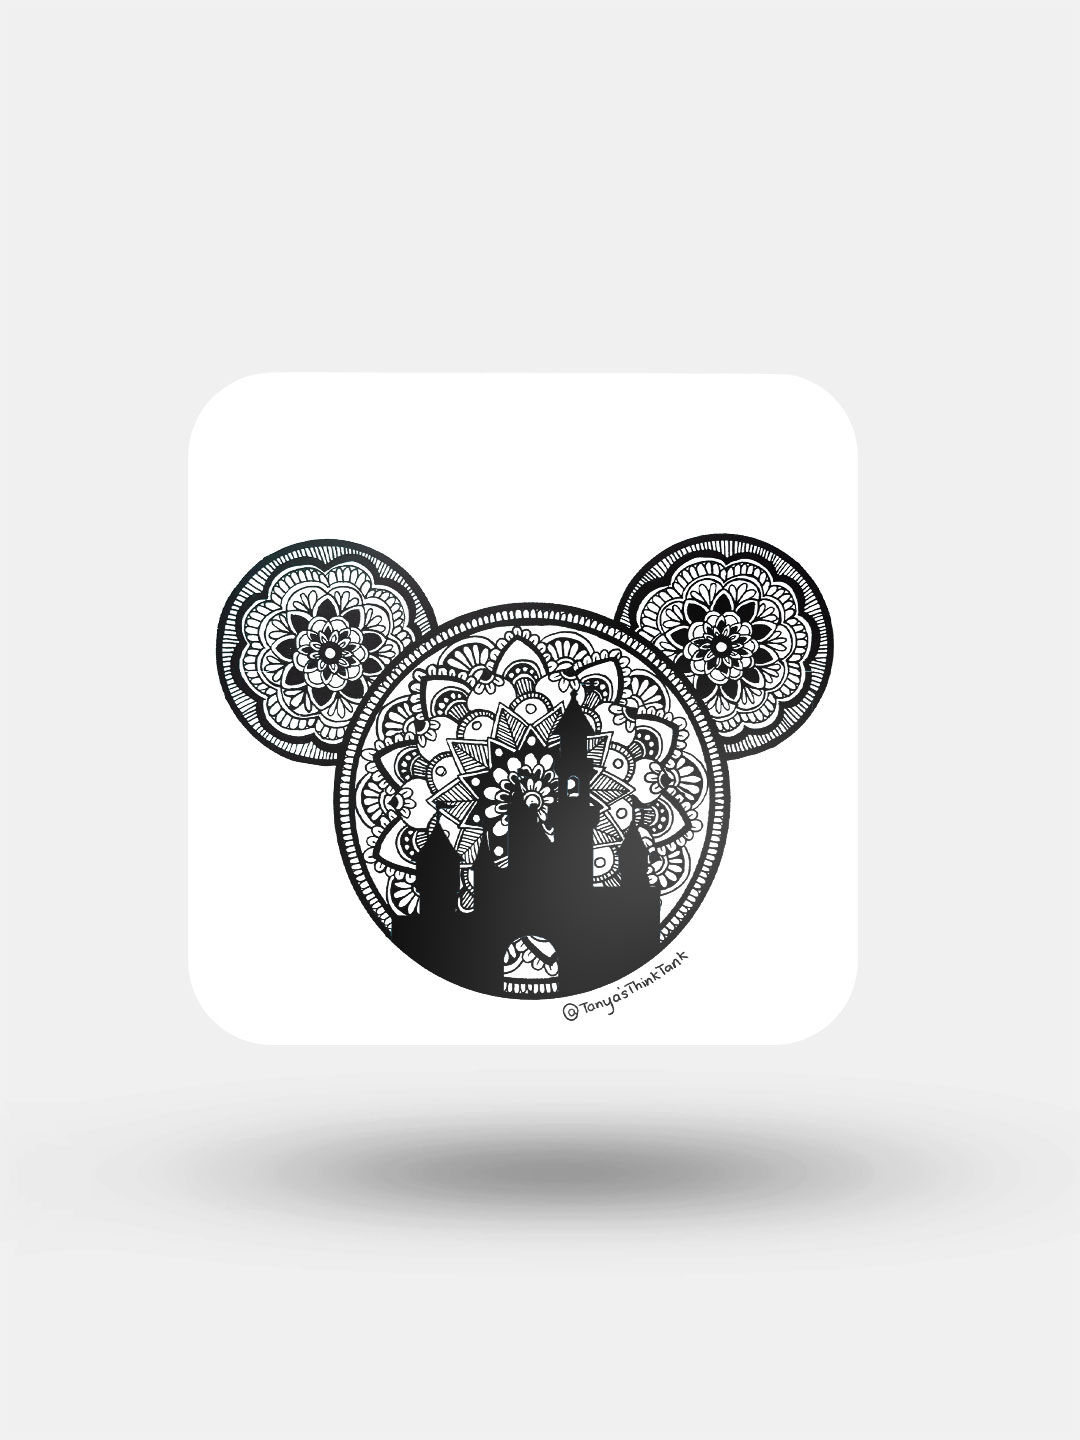 Buy Disney - 10 X 10 (cm) Coaster Coaster Online